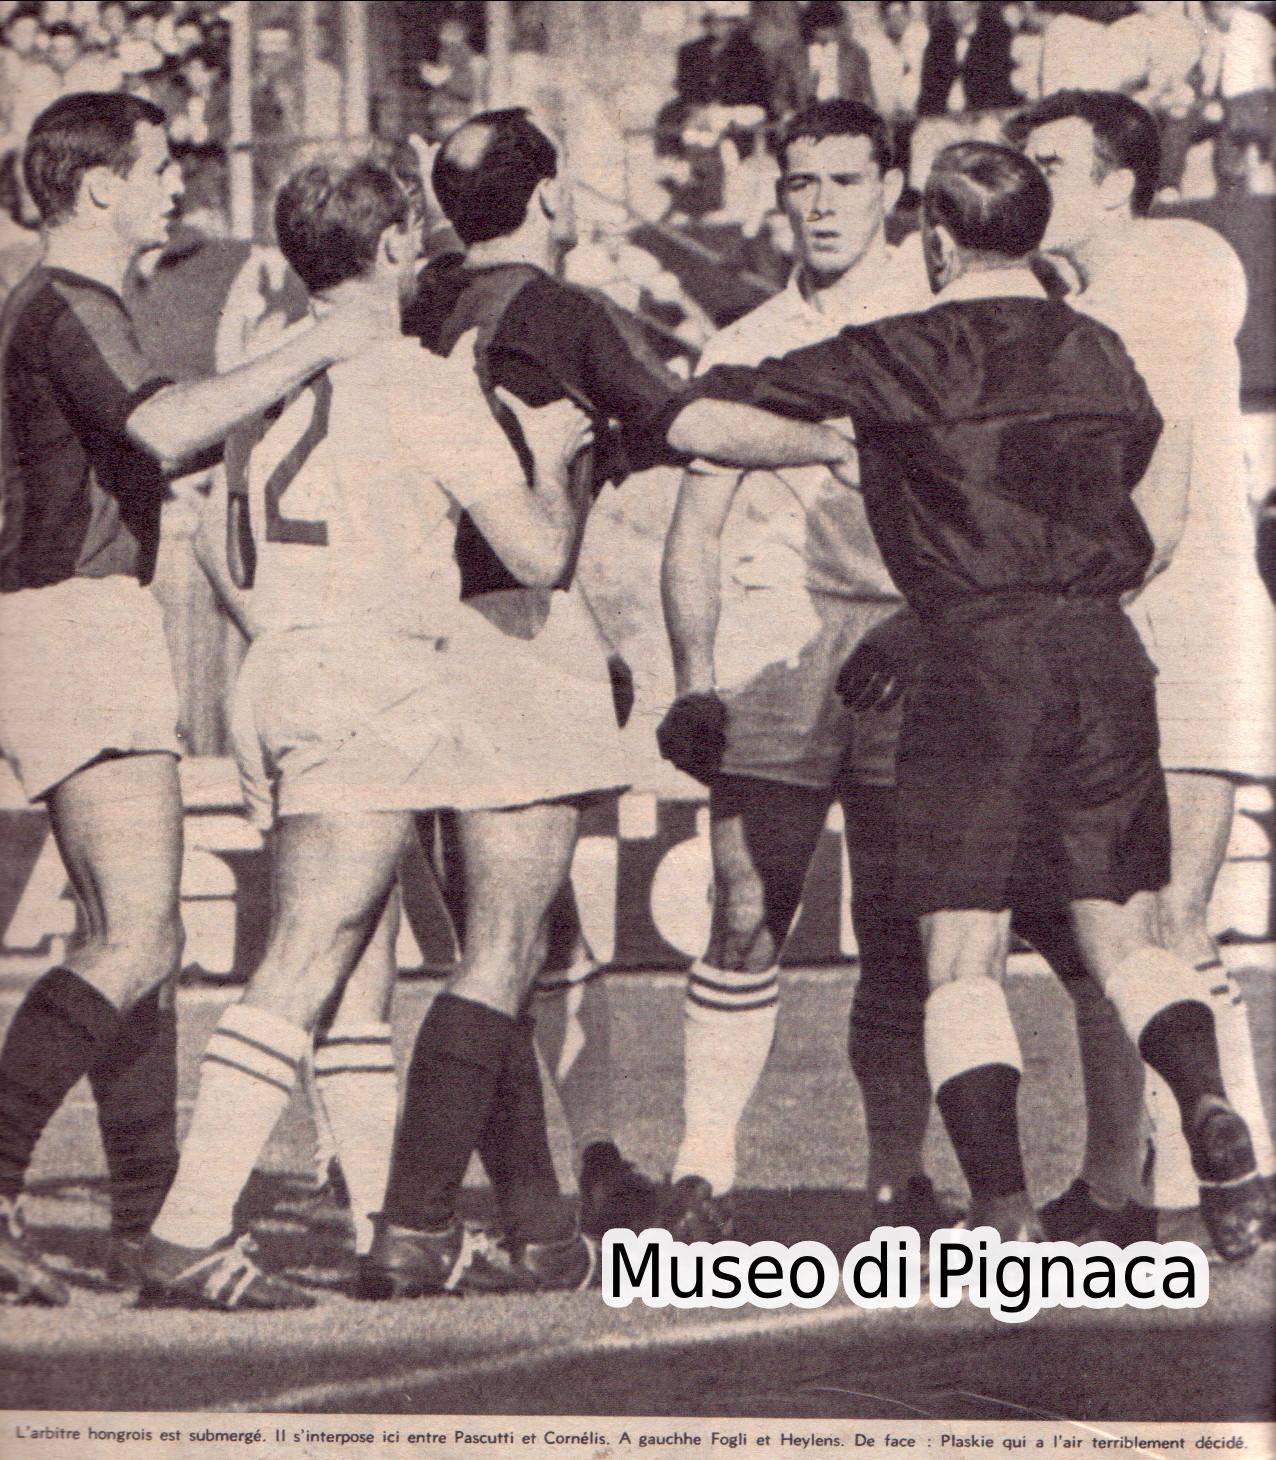 1964  Bologna  Anderlecht - animi surriscaldati